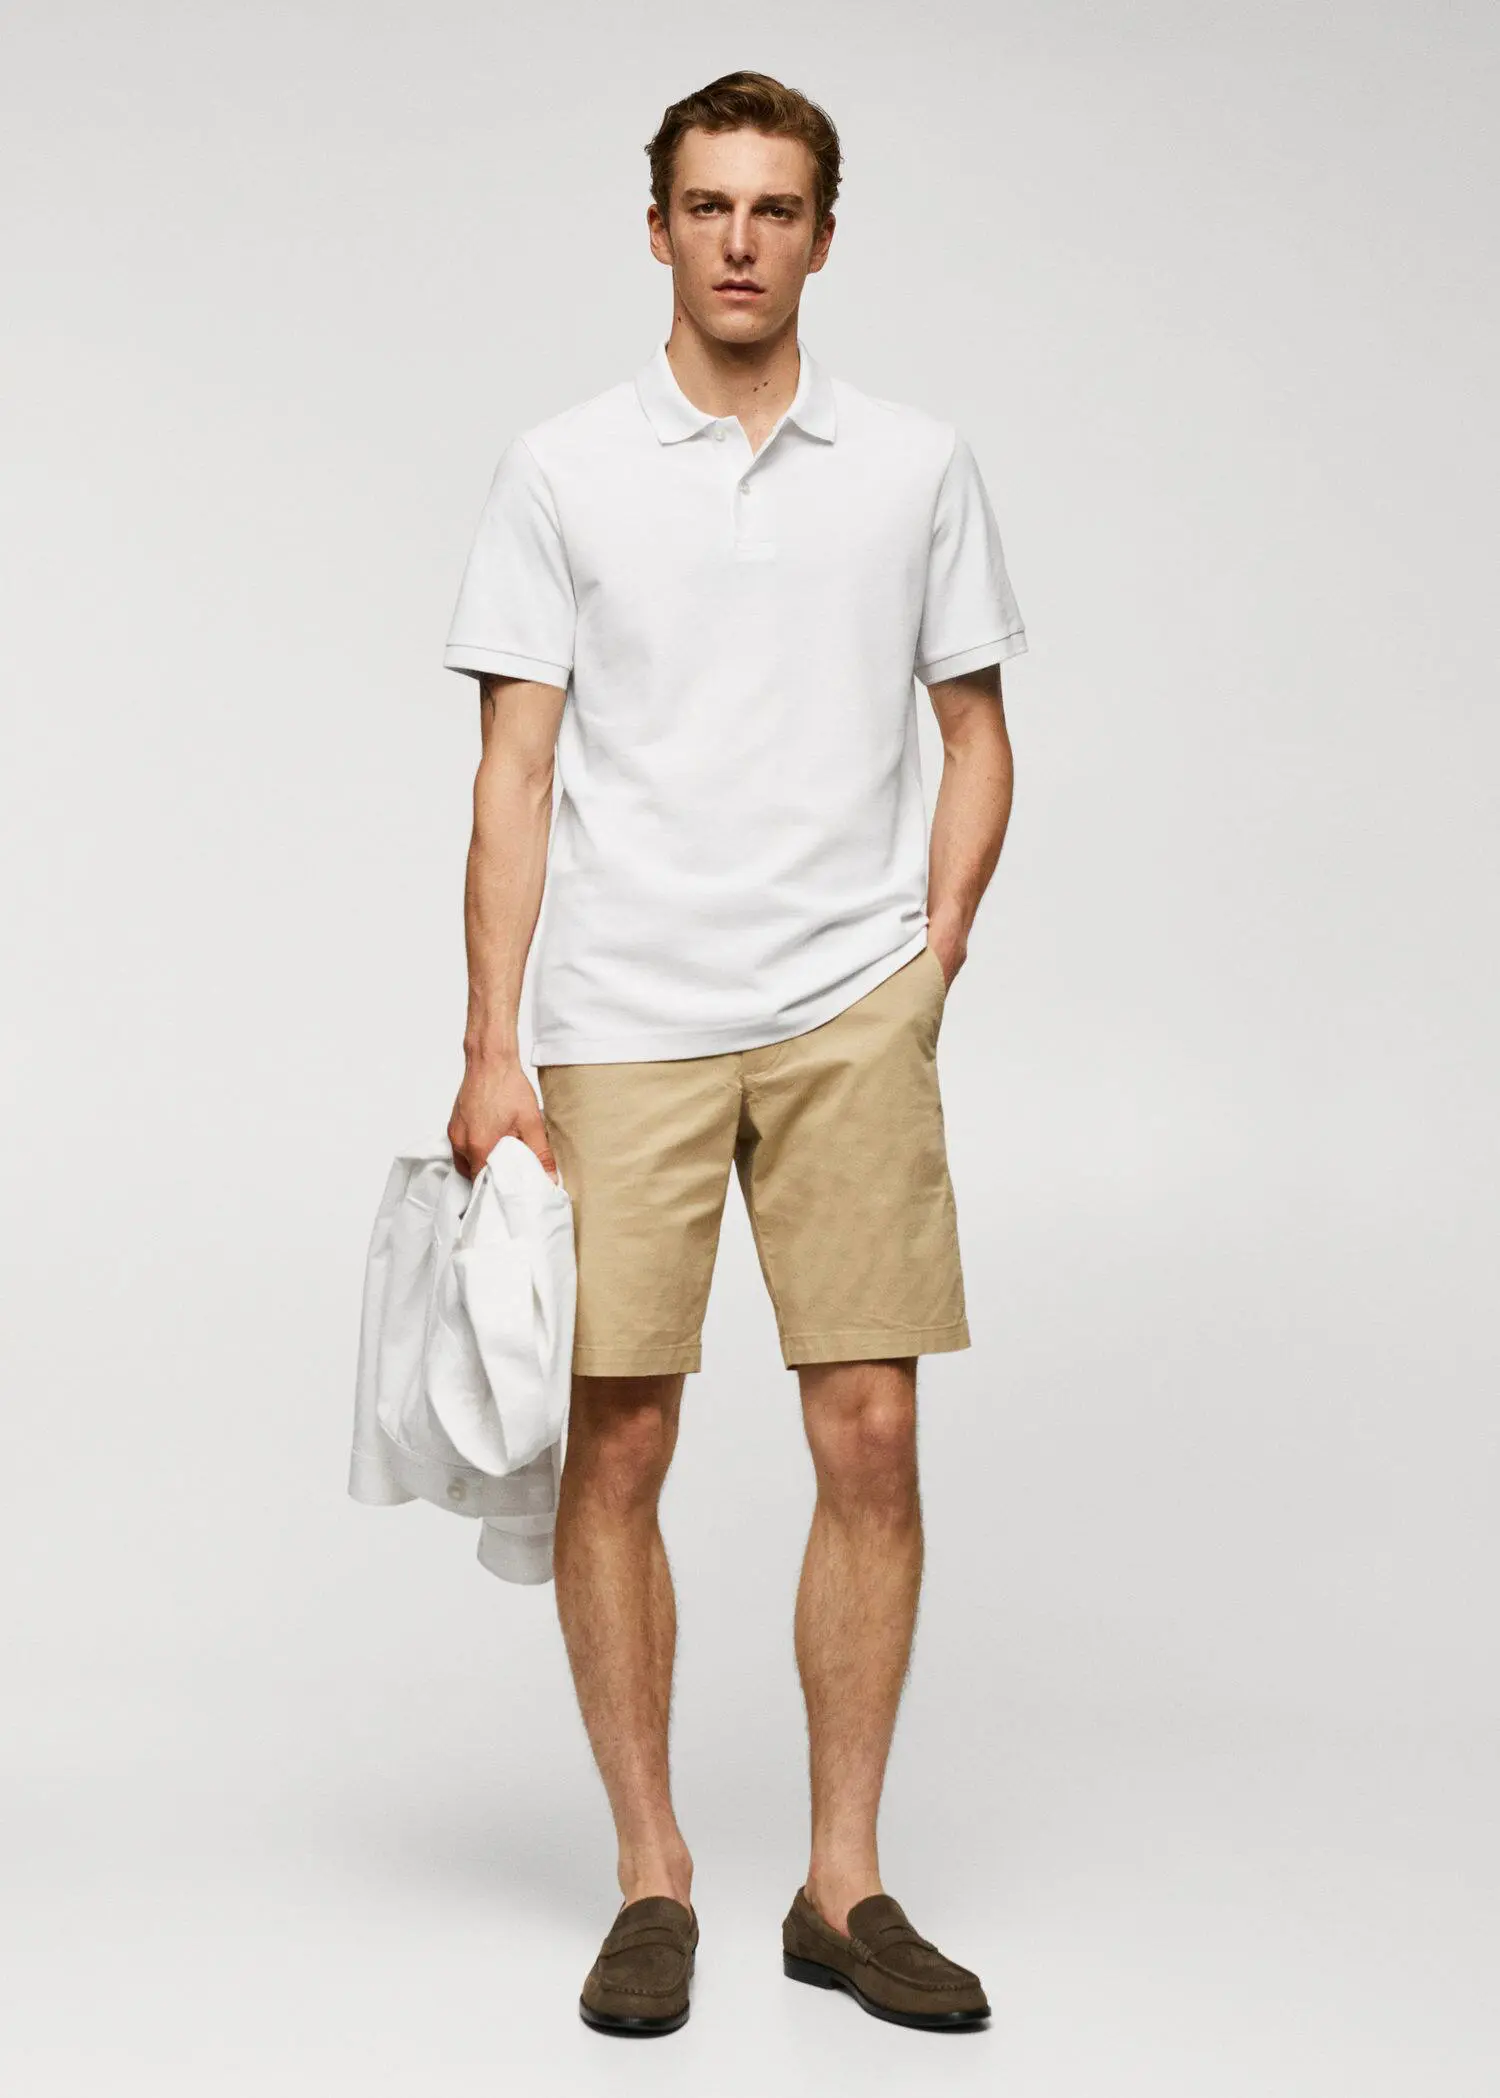 Mango 100% cotton pique polo shirt. a man in a white shirt and tan shorts. 